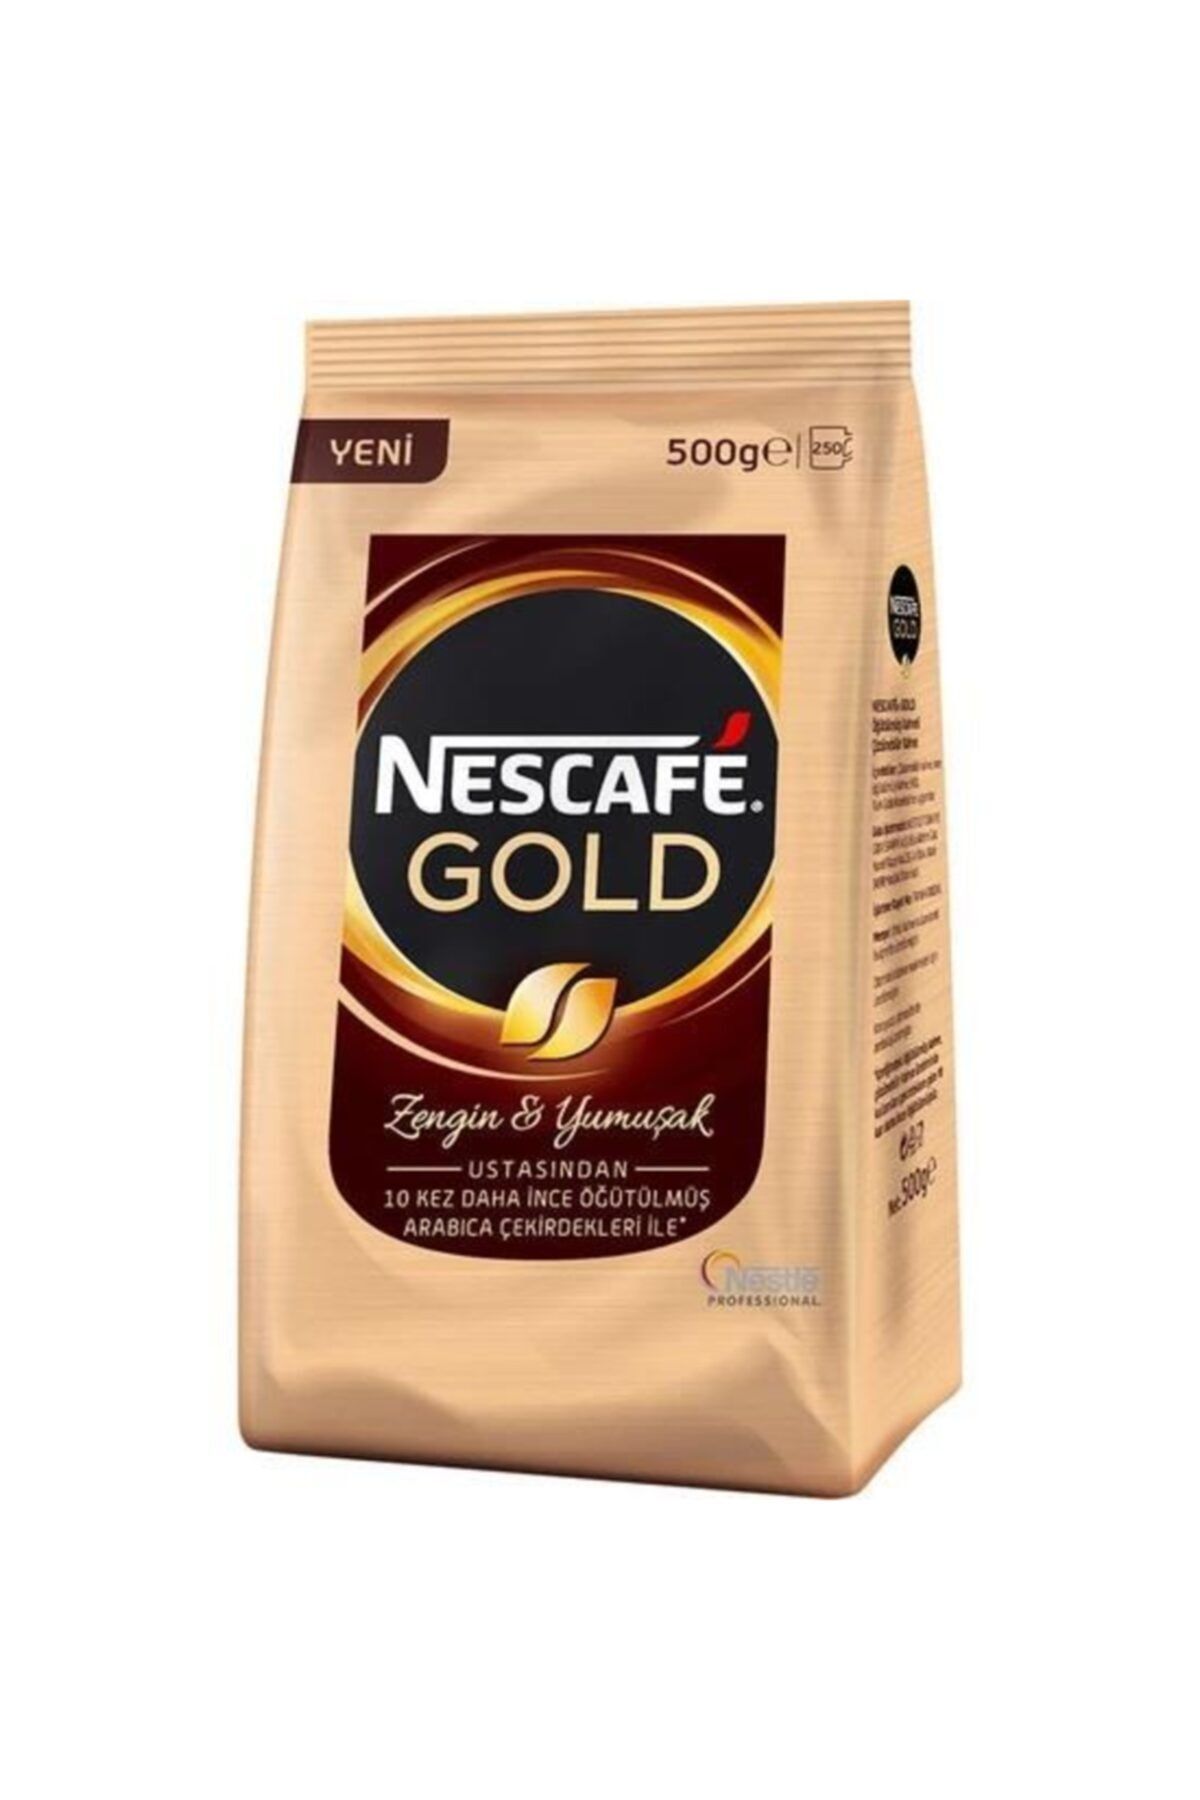 Кофе нескафе голд 500 гр. Нескафе Голд 500. Nescafe Gold 900 гр. Nescafe Gold пакет. Нескафе Голд 500 грамм.